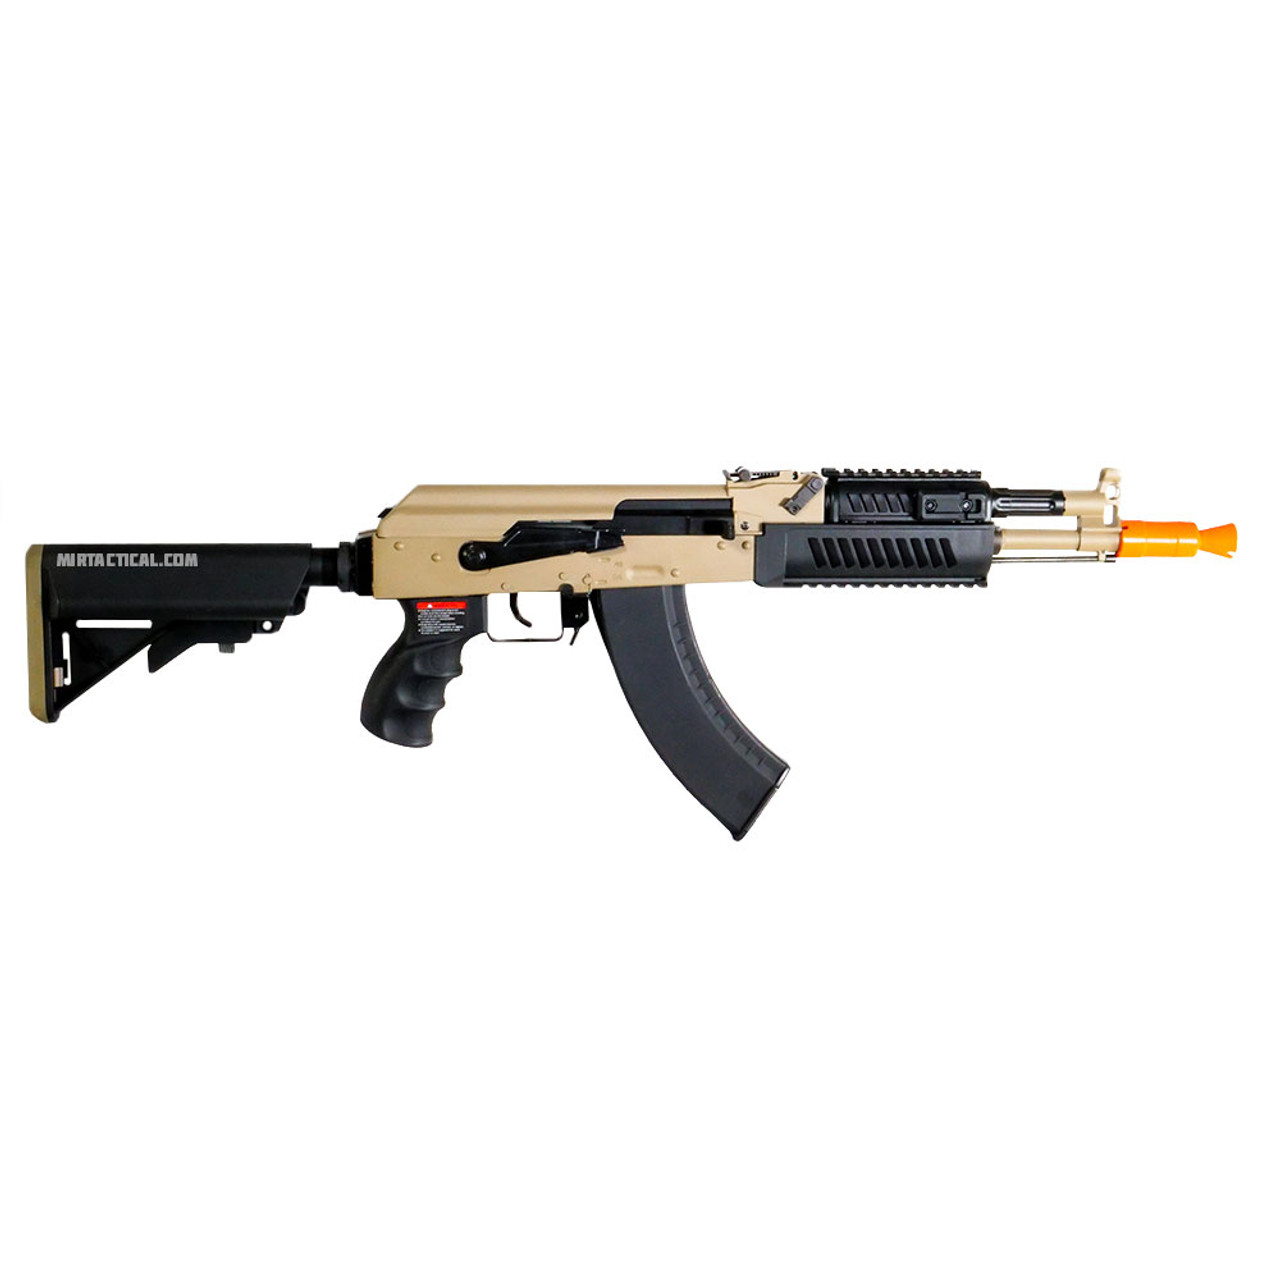 Gandg Rk104 Etu Ak Airsoft Carbine Aeg Black And Fde Package Includes